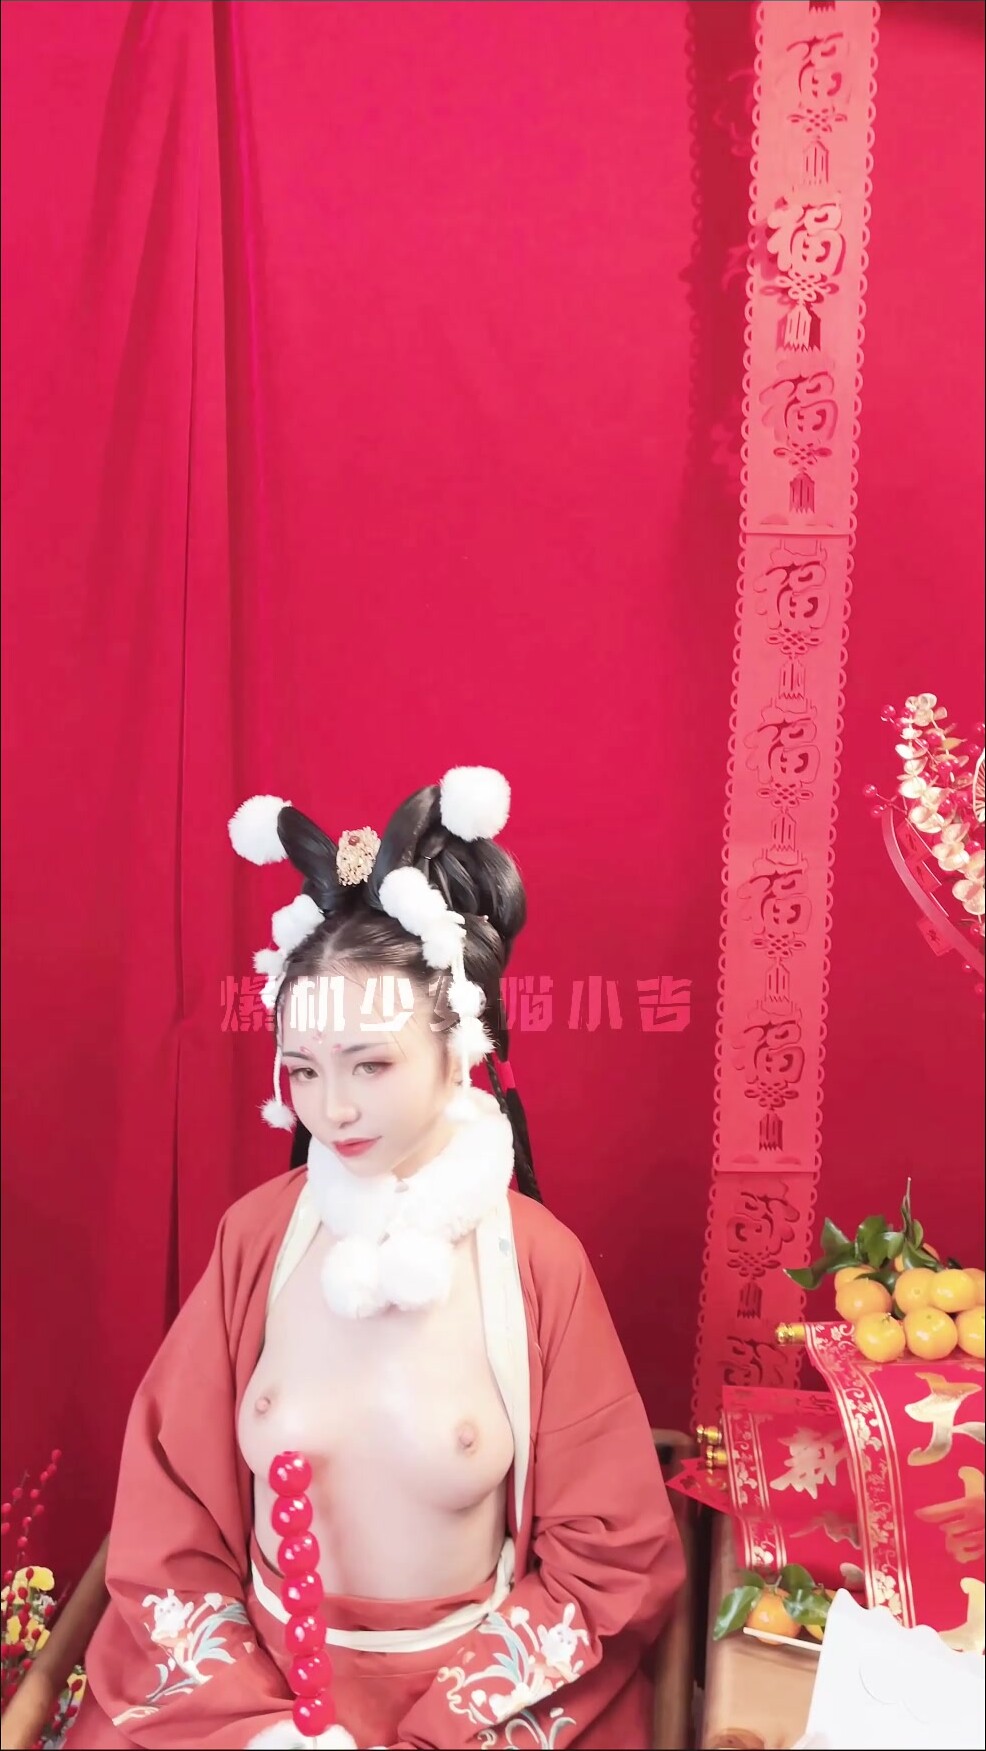 High-end ACG industry goddess popping machine girl ▌Meow Xiaoji ▌Rare T3 member "Jade Rabbit Welcomes Spring" red hot M legs break point dedication 賀慶新春 珍藏必備爆贊!